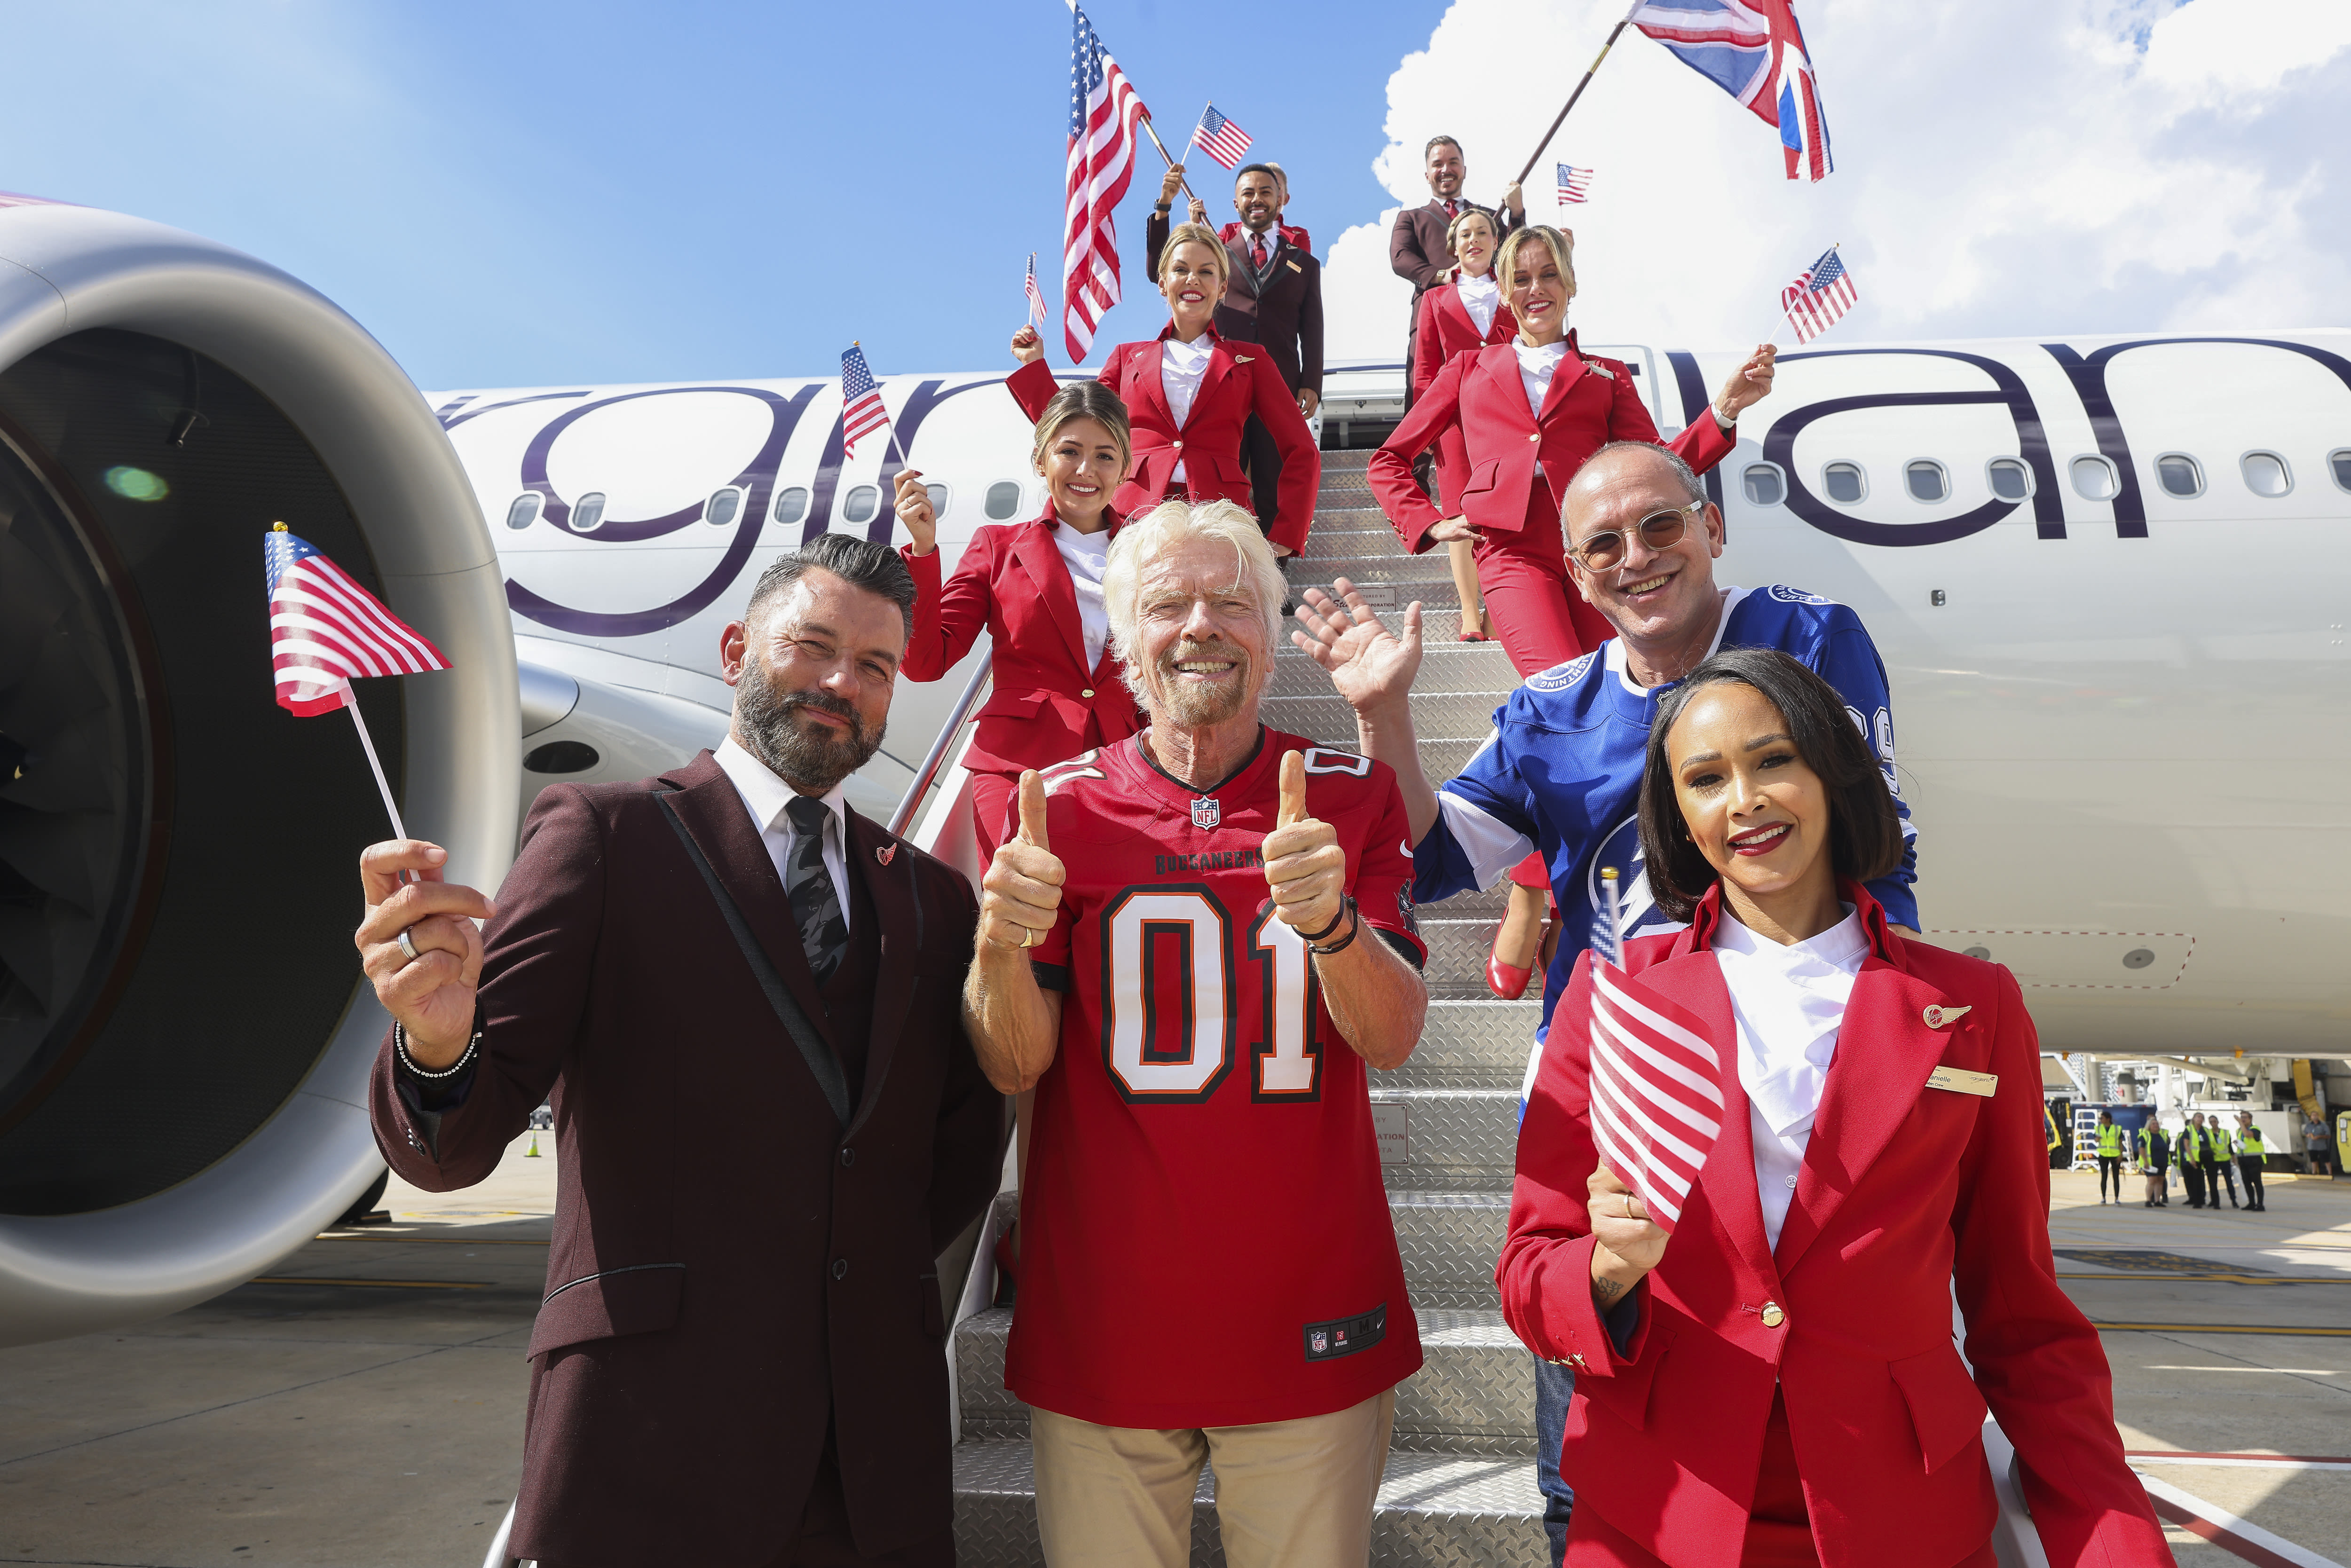 Richard Branson, Shai Weiss and Virgin Atlantic crew on the Tampa Inaugural flight